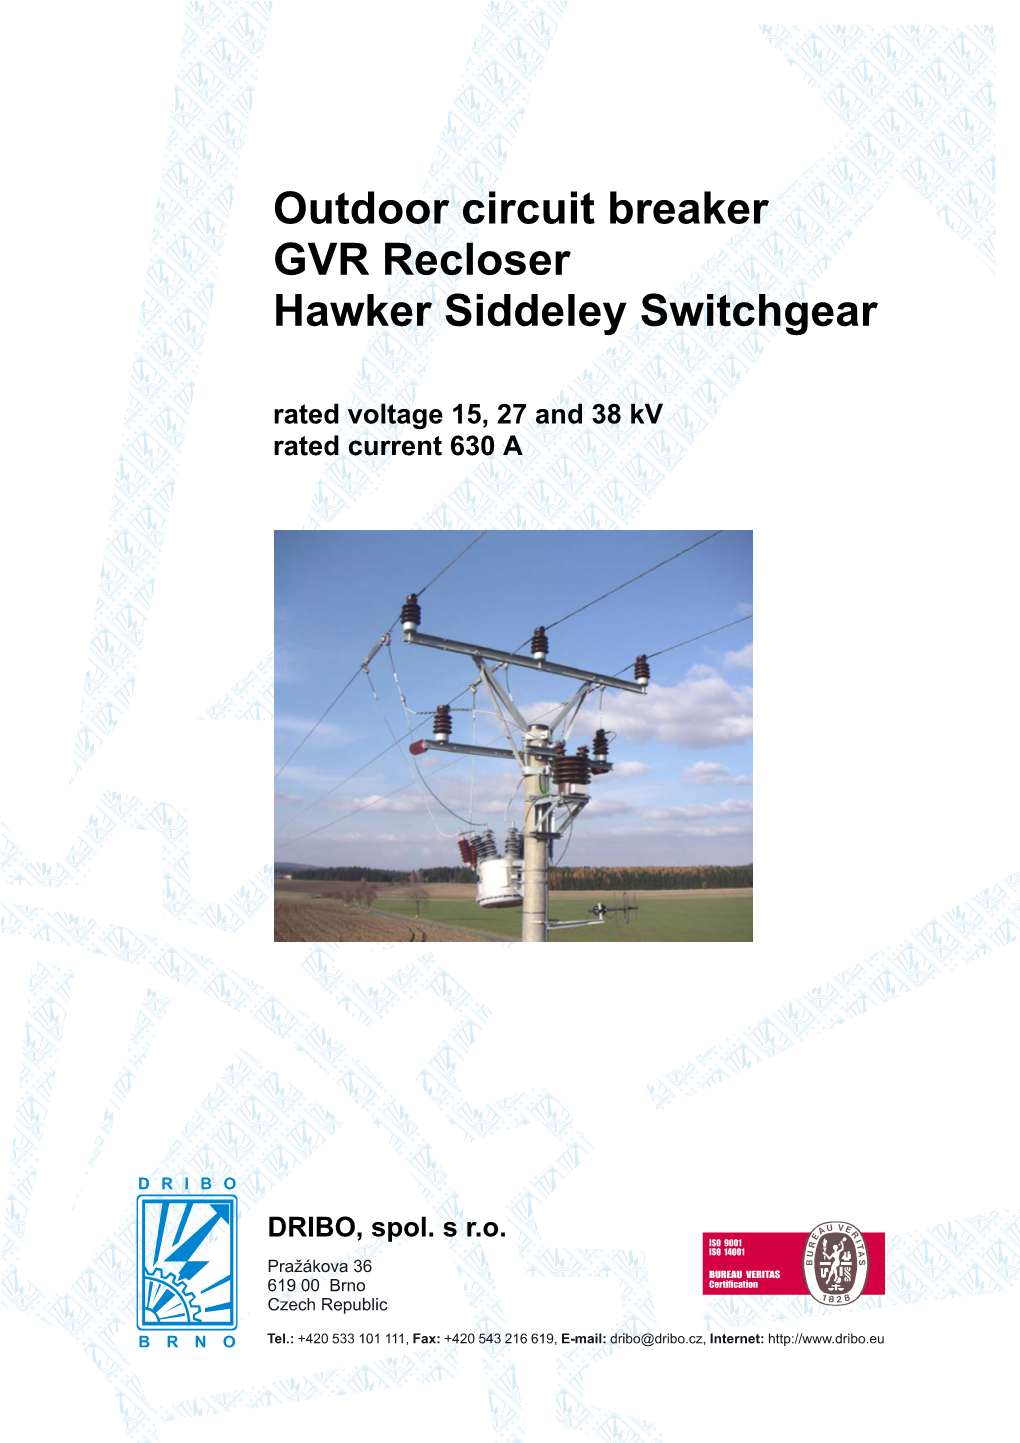 Outdoor Circuit Breaker GVR Recloser Hawker Siddeley Switchgear